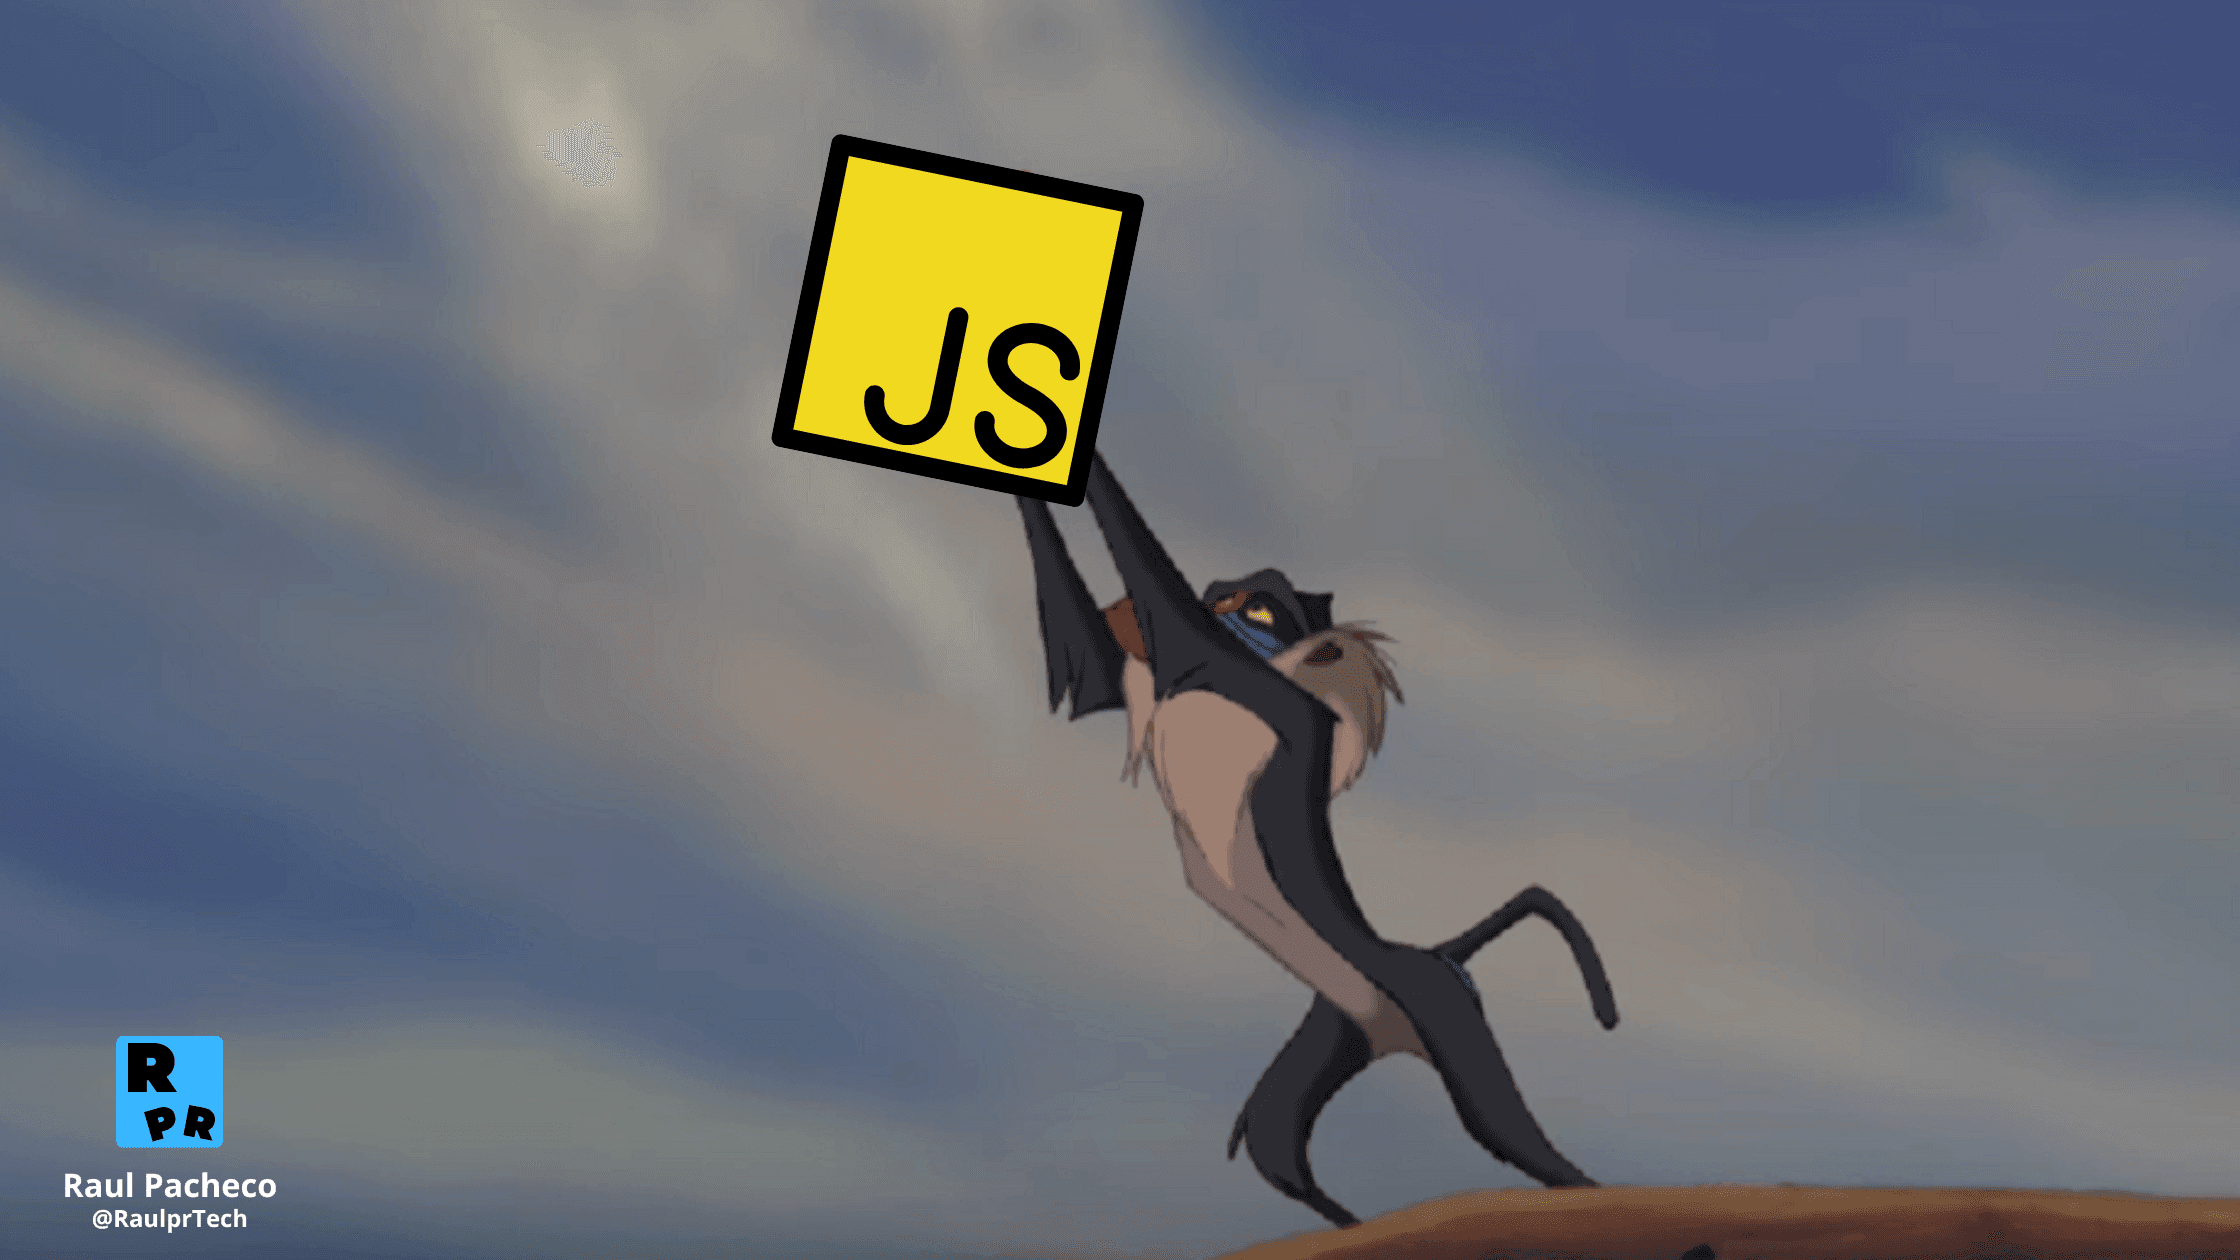 Nacimiento de JavaScript -Meme simio levantando el logo de JavaScript